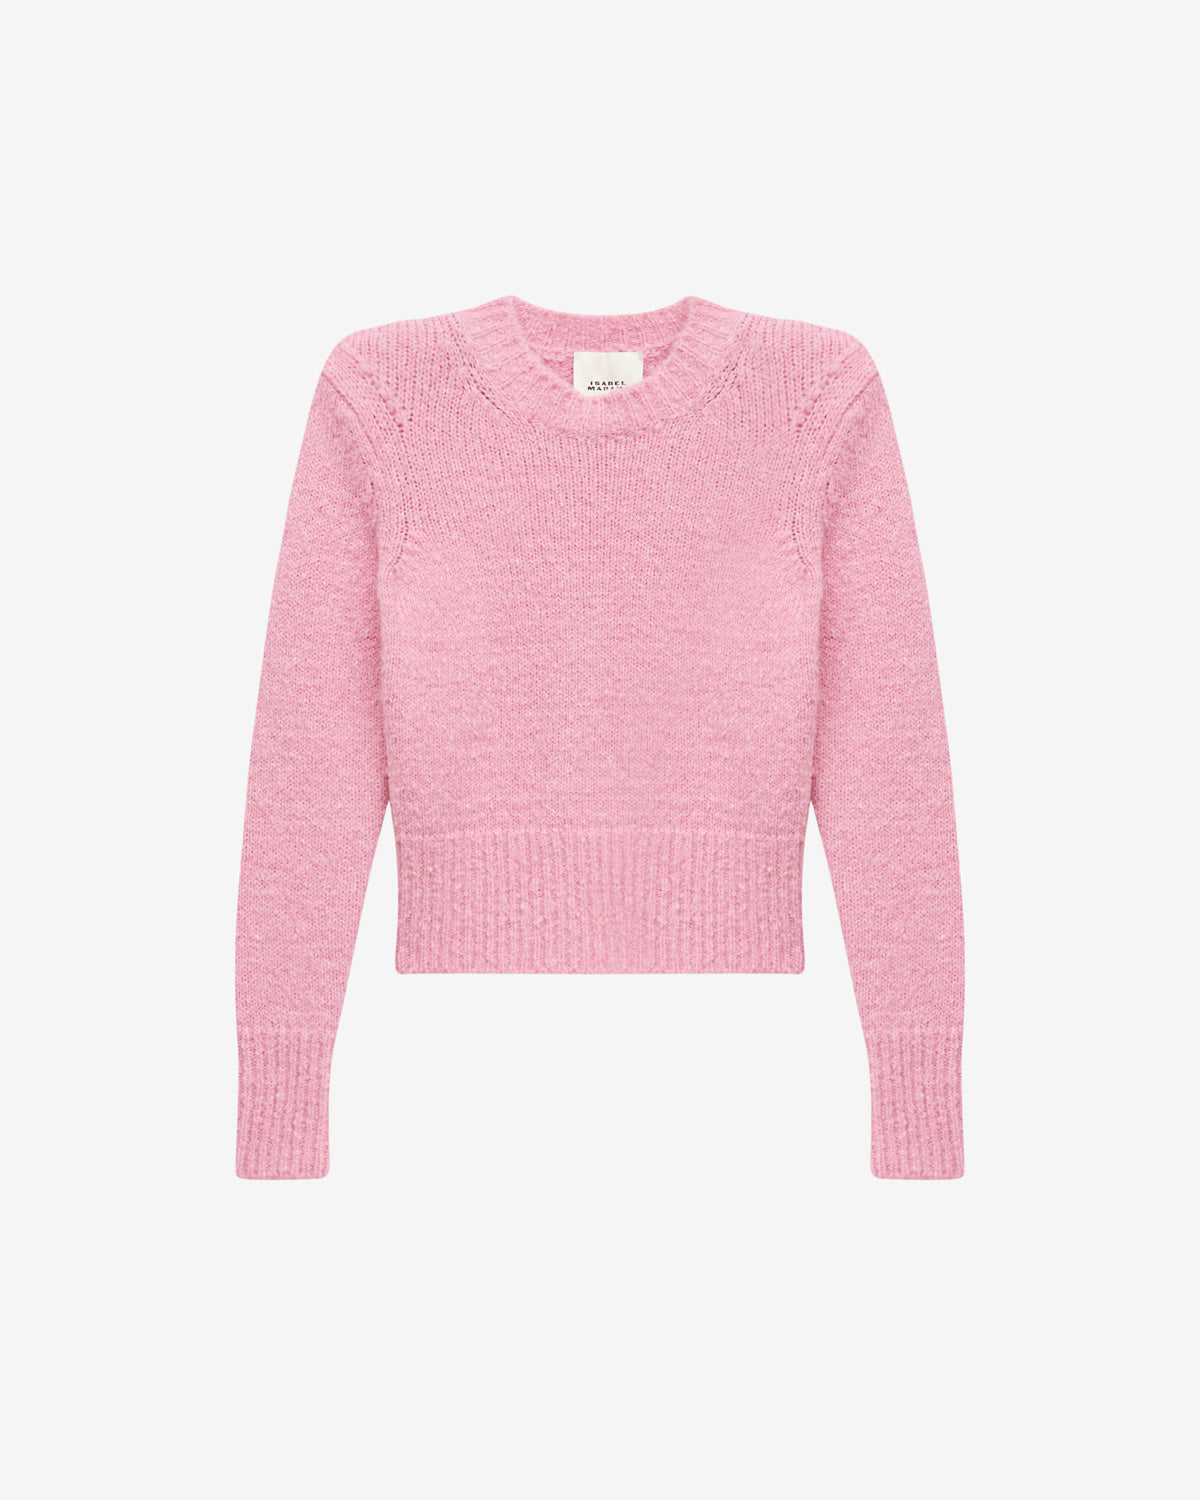 Kalo sweater Woman Light pink 1